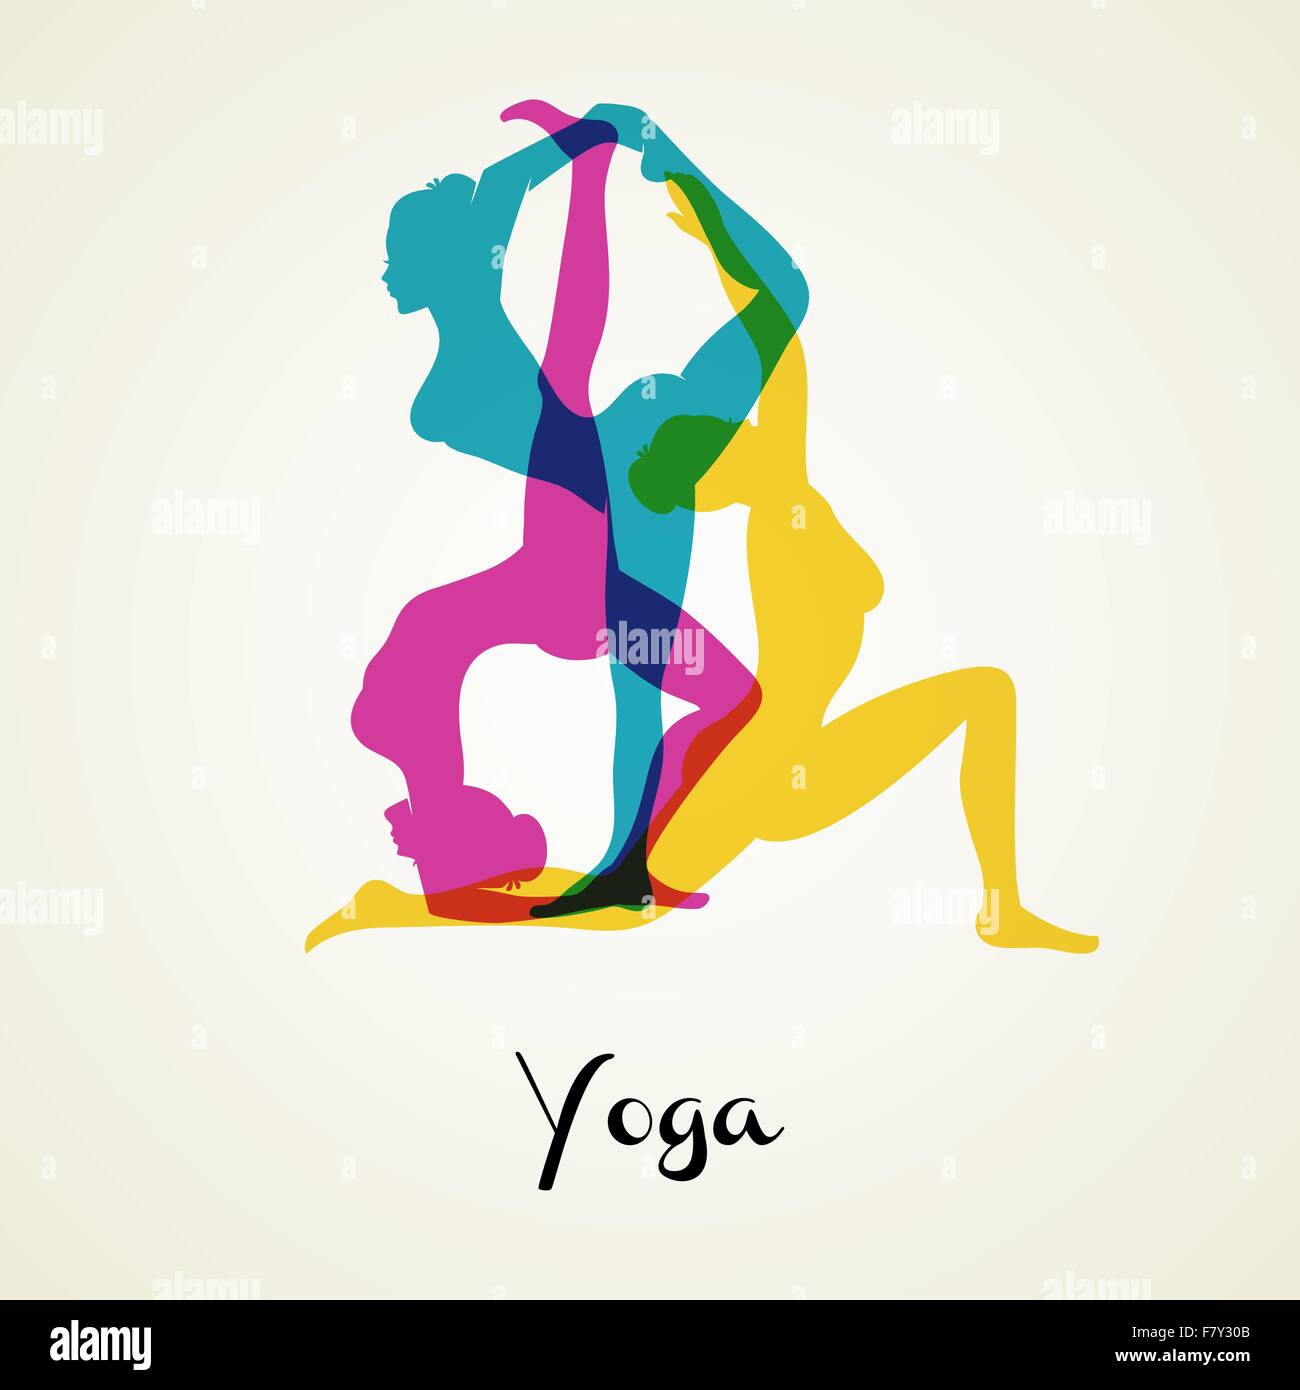 Yoga poses silhouette Stock Vector